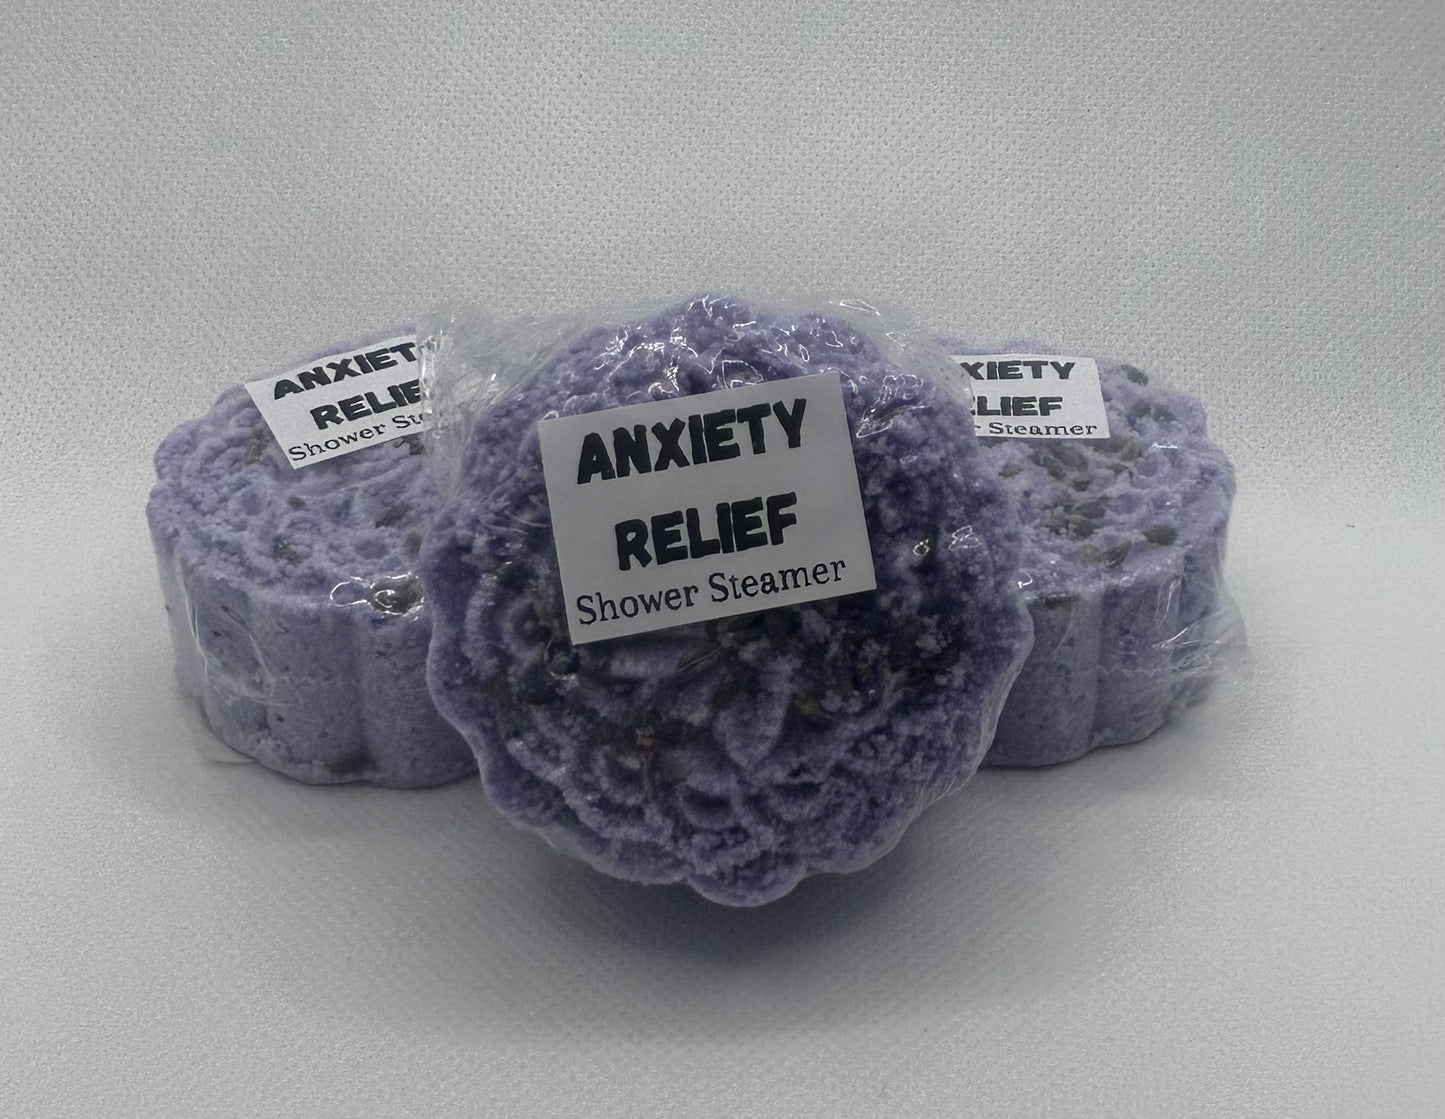 Anxiety Relief Shower Steamer